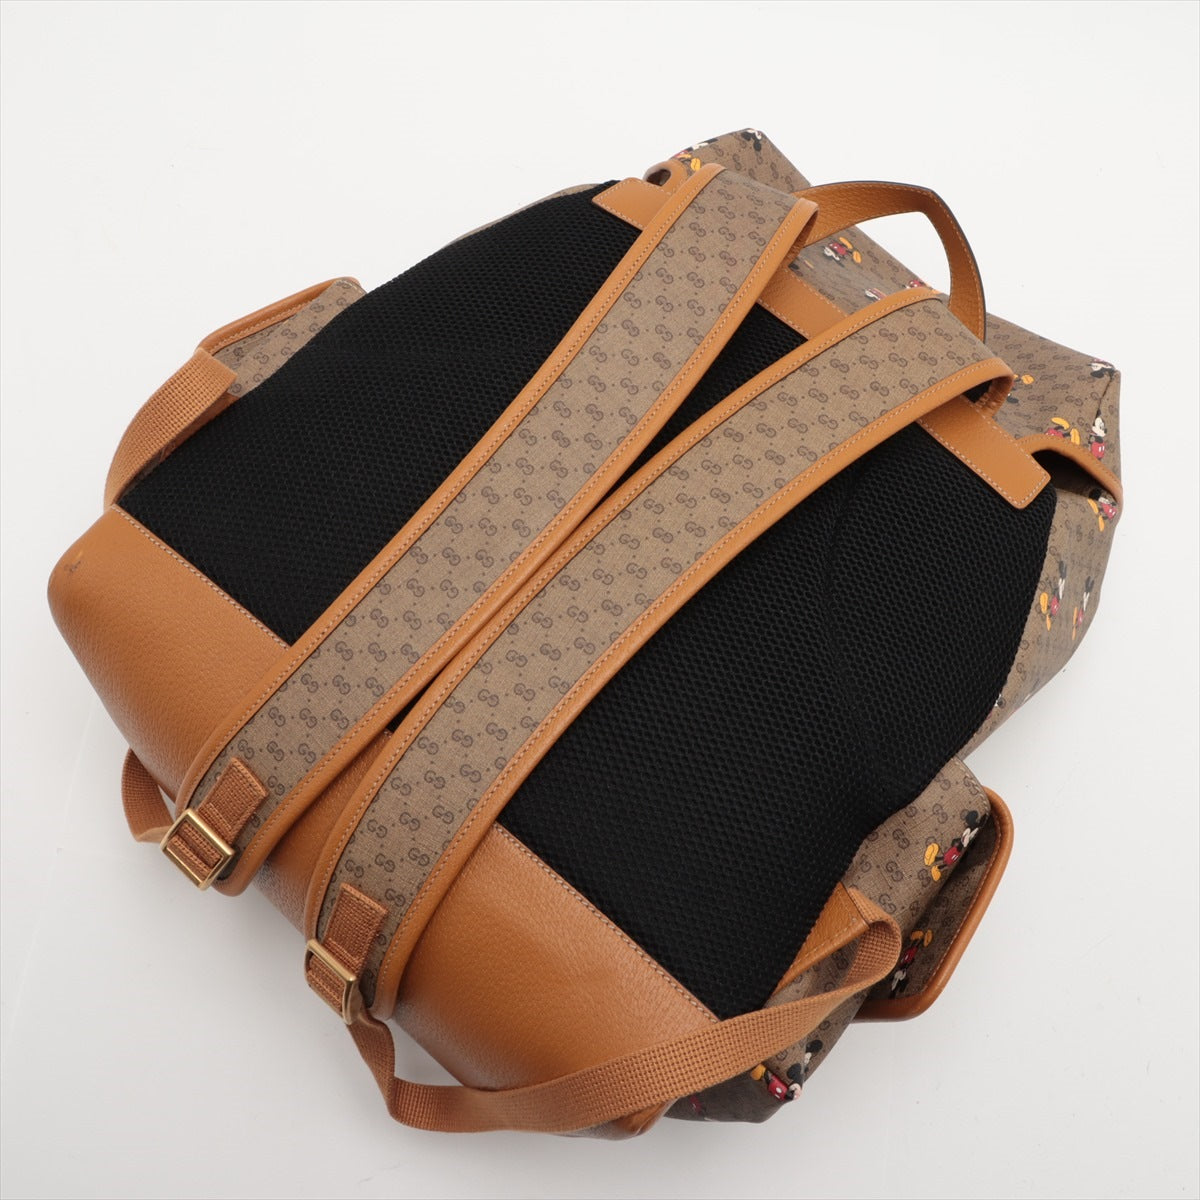 Gucci x Disney Mini GG Supreme PVC & leather Backpack Brown 603898